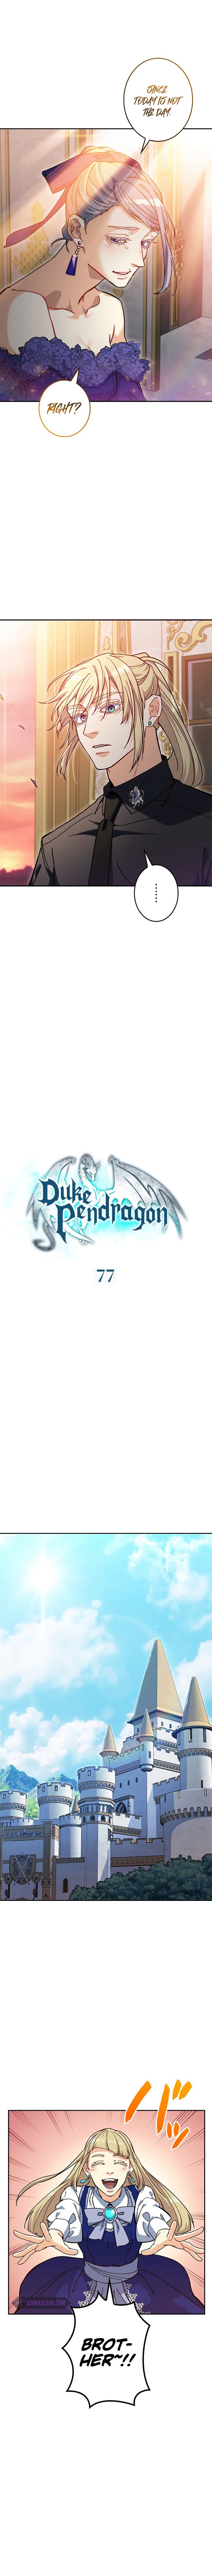 Duke Pendragon 77 5